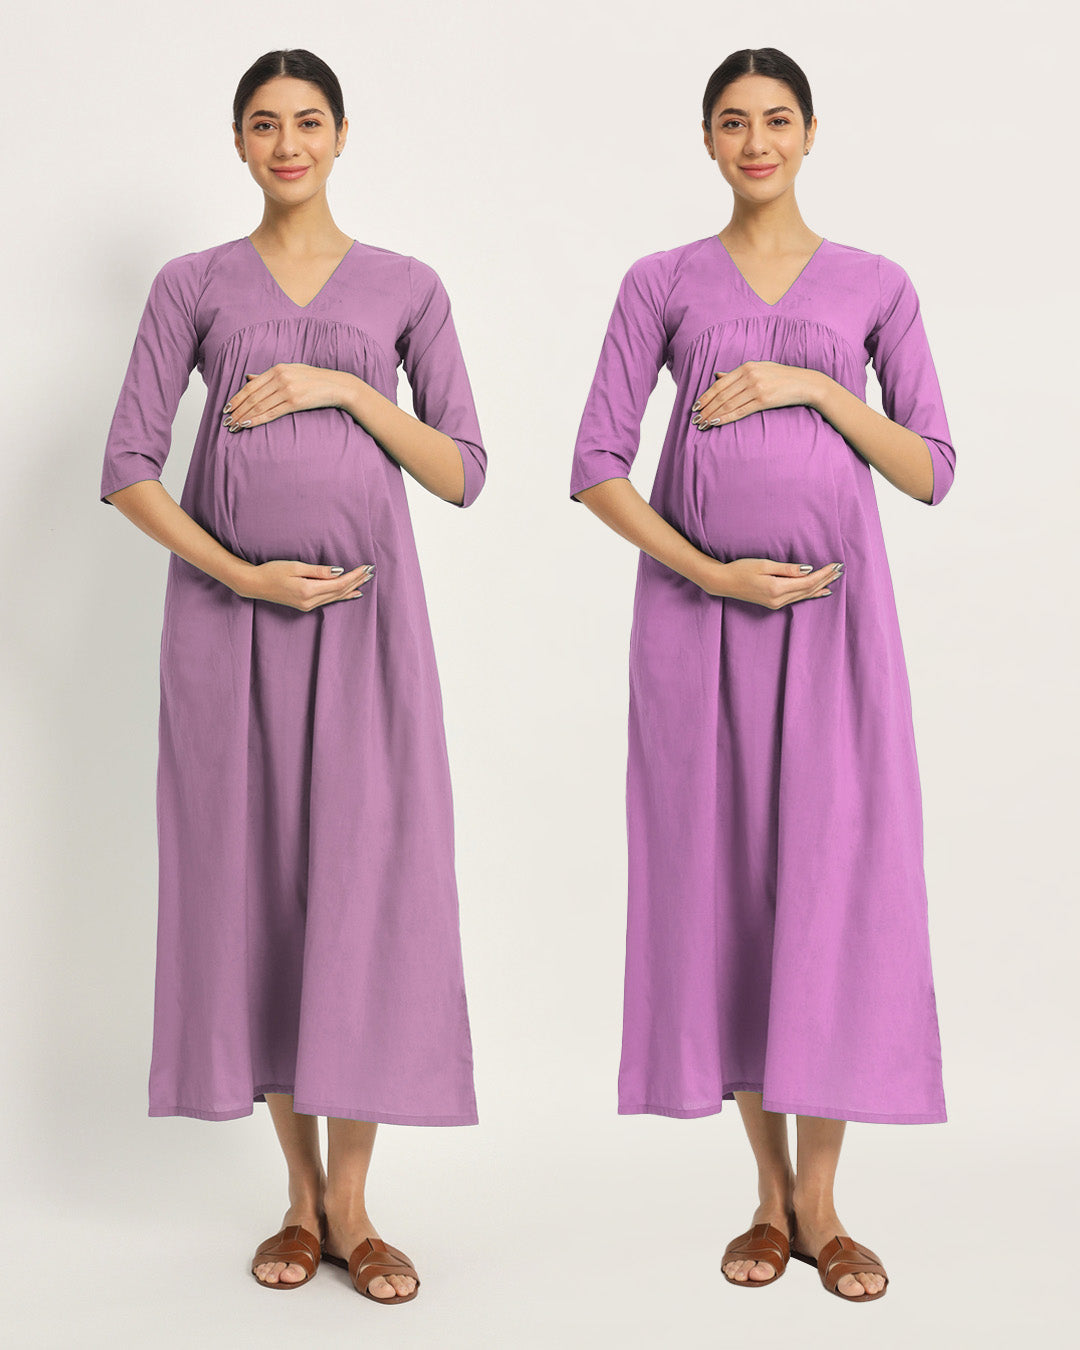 Combo : Iris Pink & Wisteria Purple Bump Comfort Maternity & Nursing Dress - Set of 2